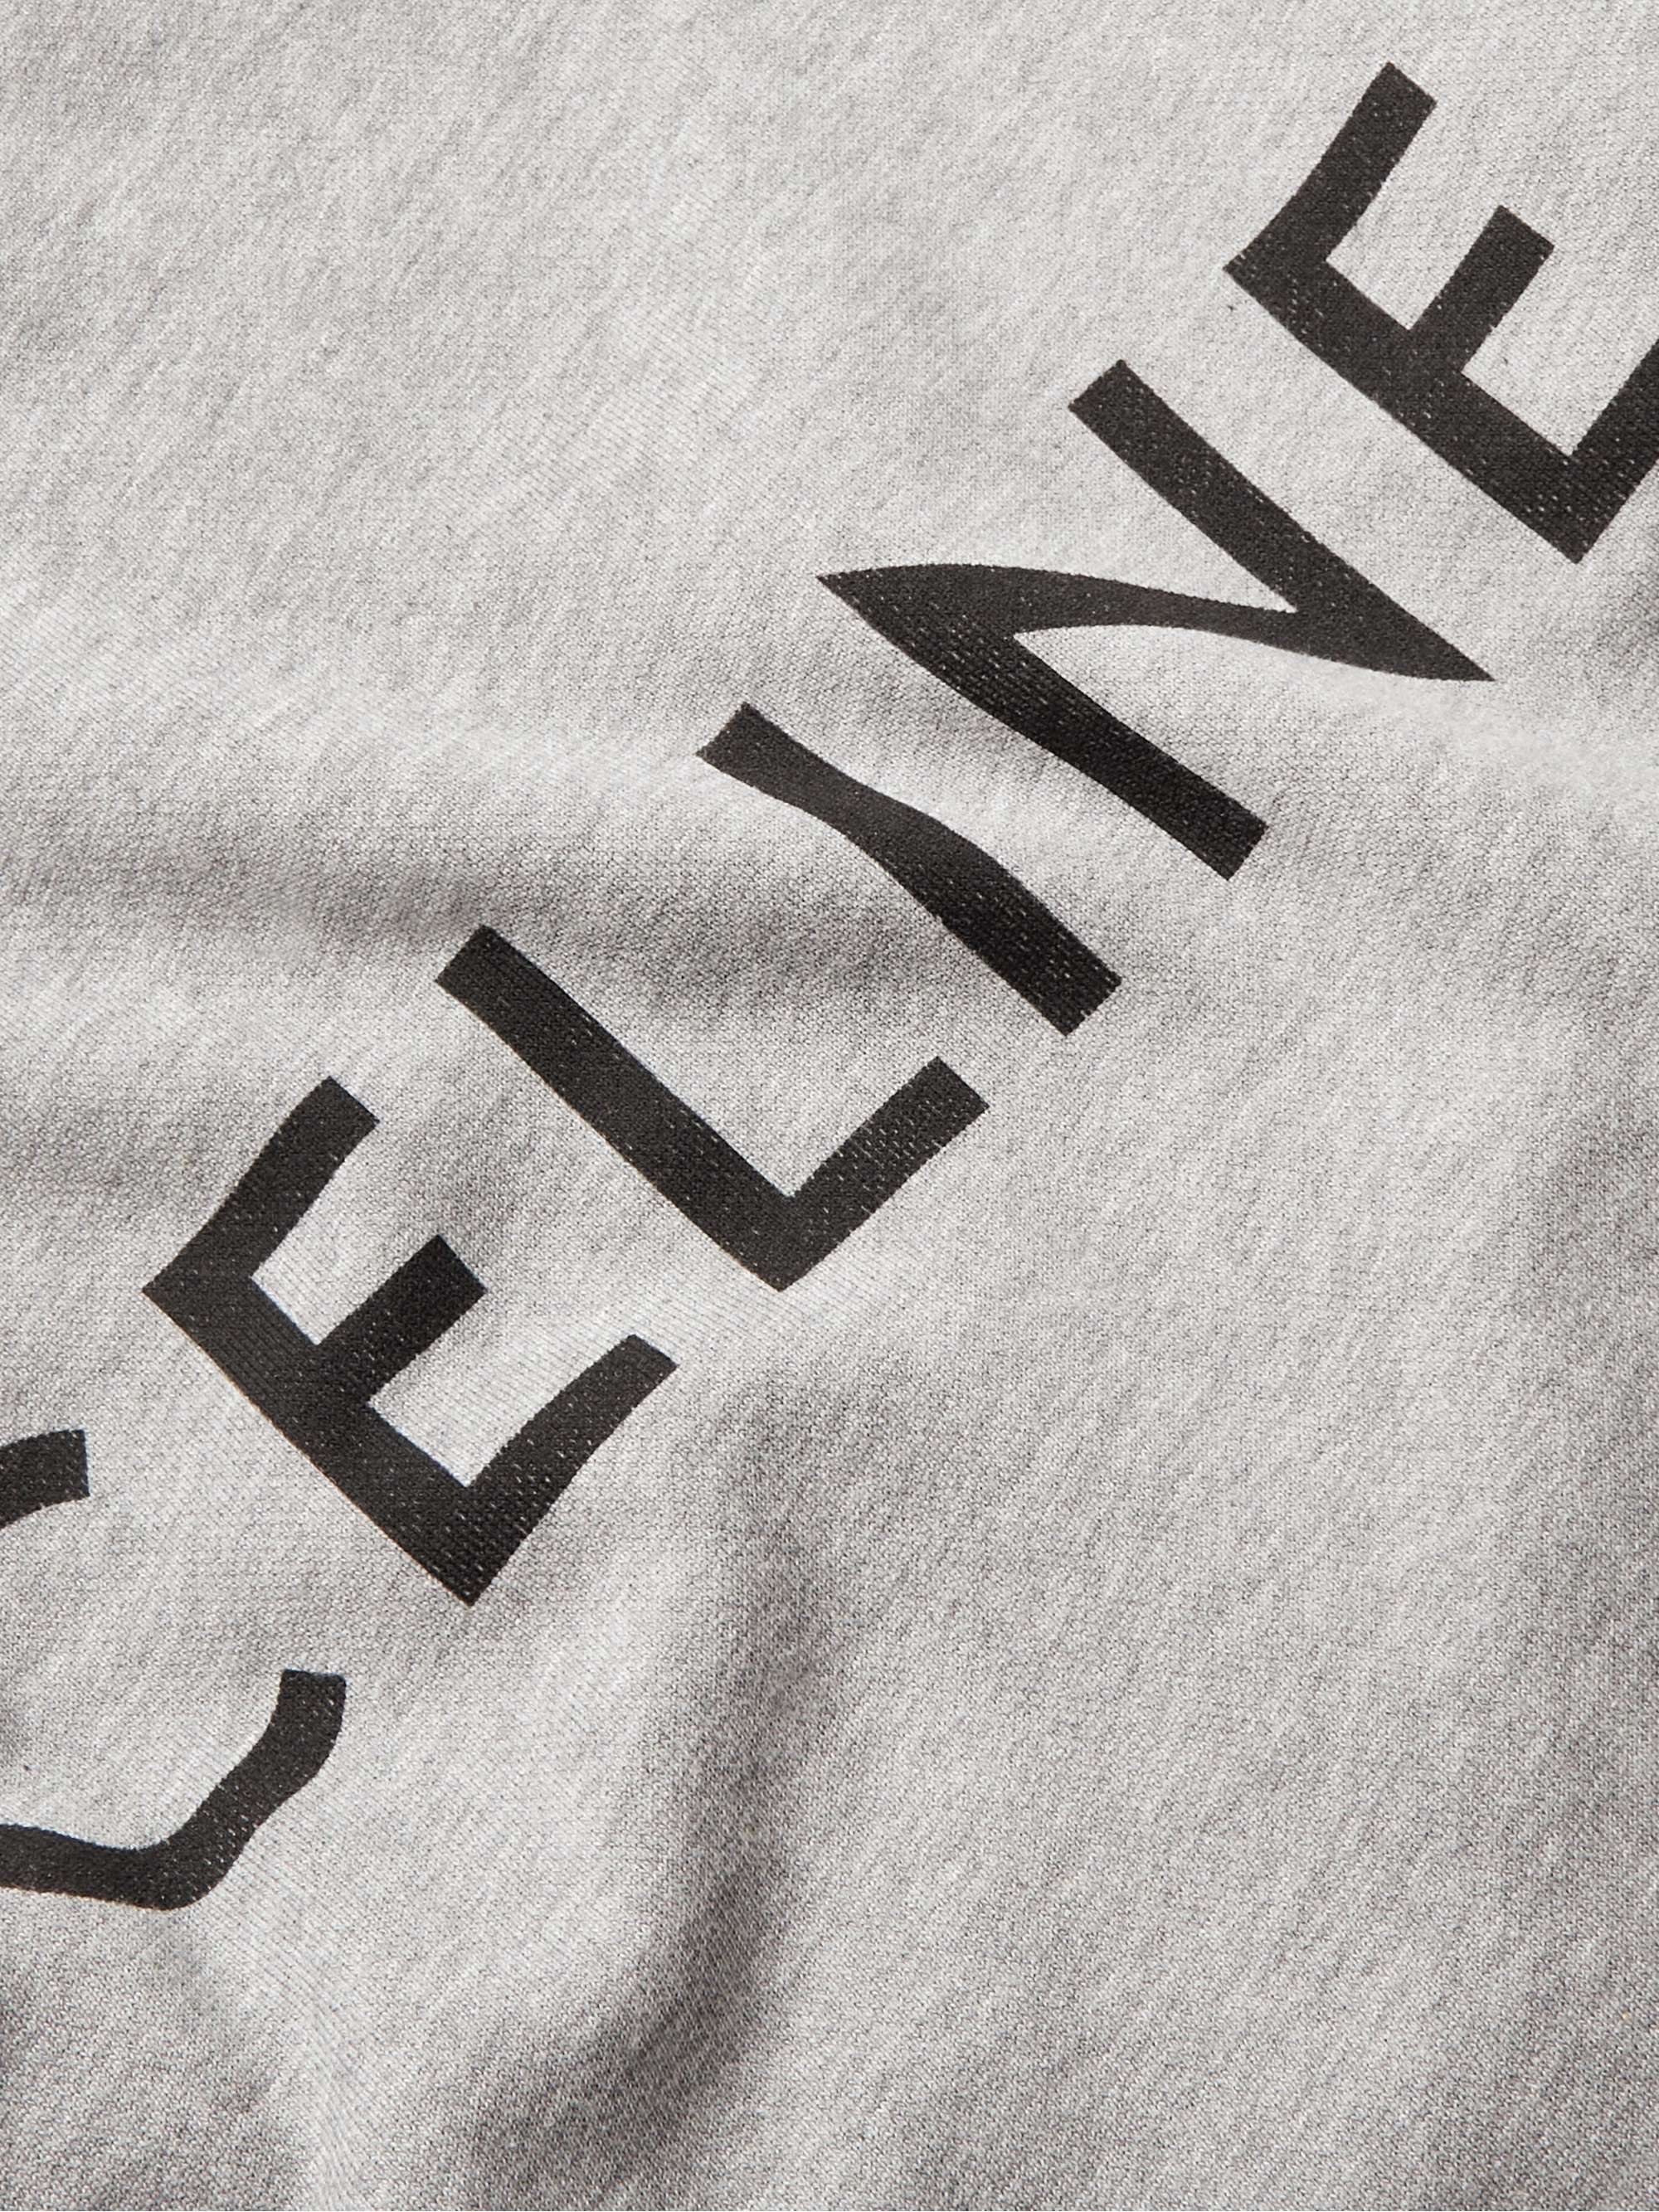 CELINE Logo-Print Stretch-Cotton Jersey Sweatshirt